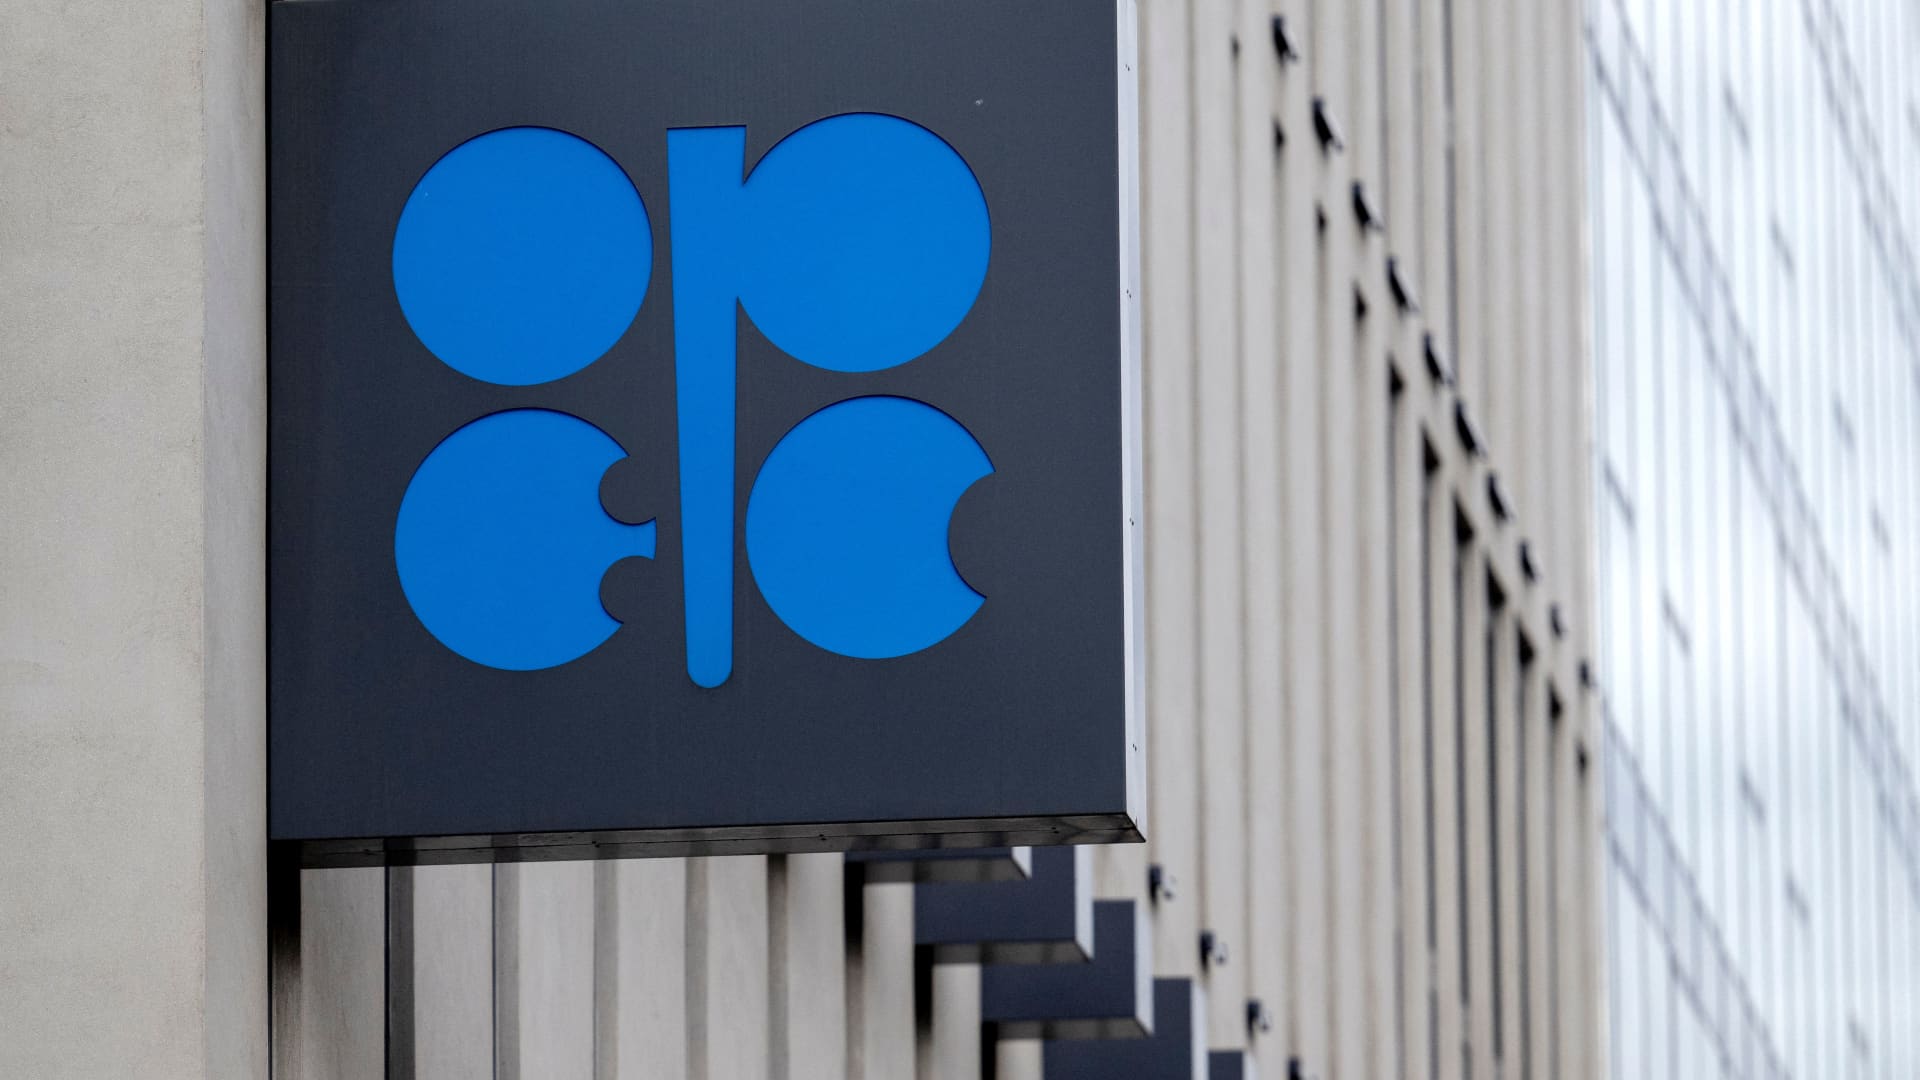 OPEC+ meets to debate production quotas, new cut: Sources